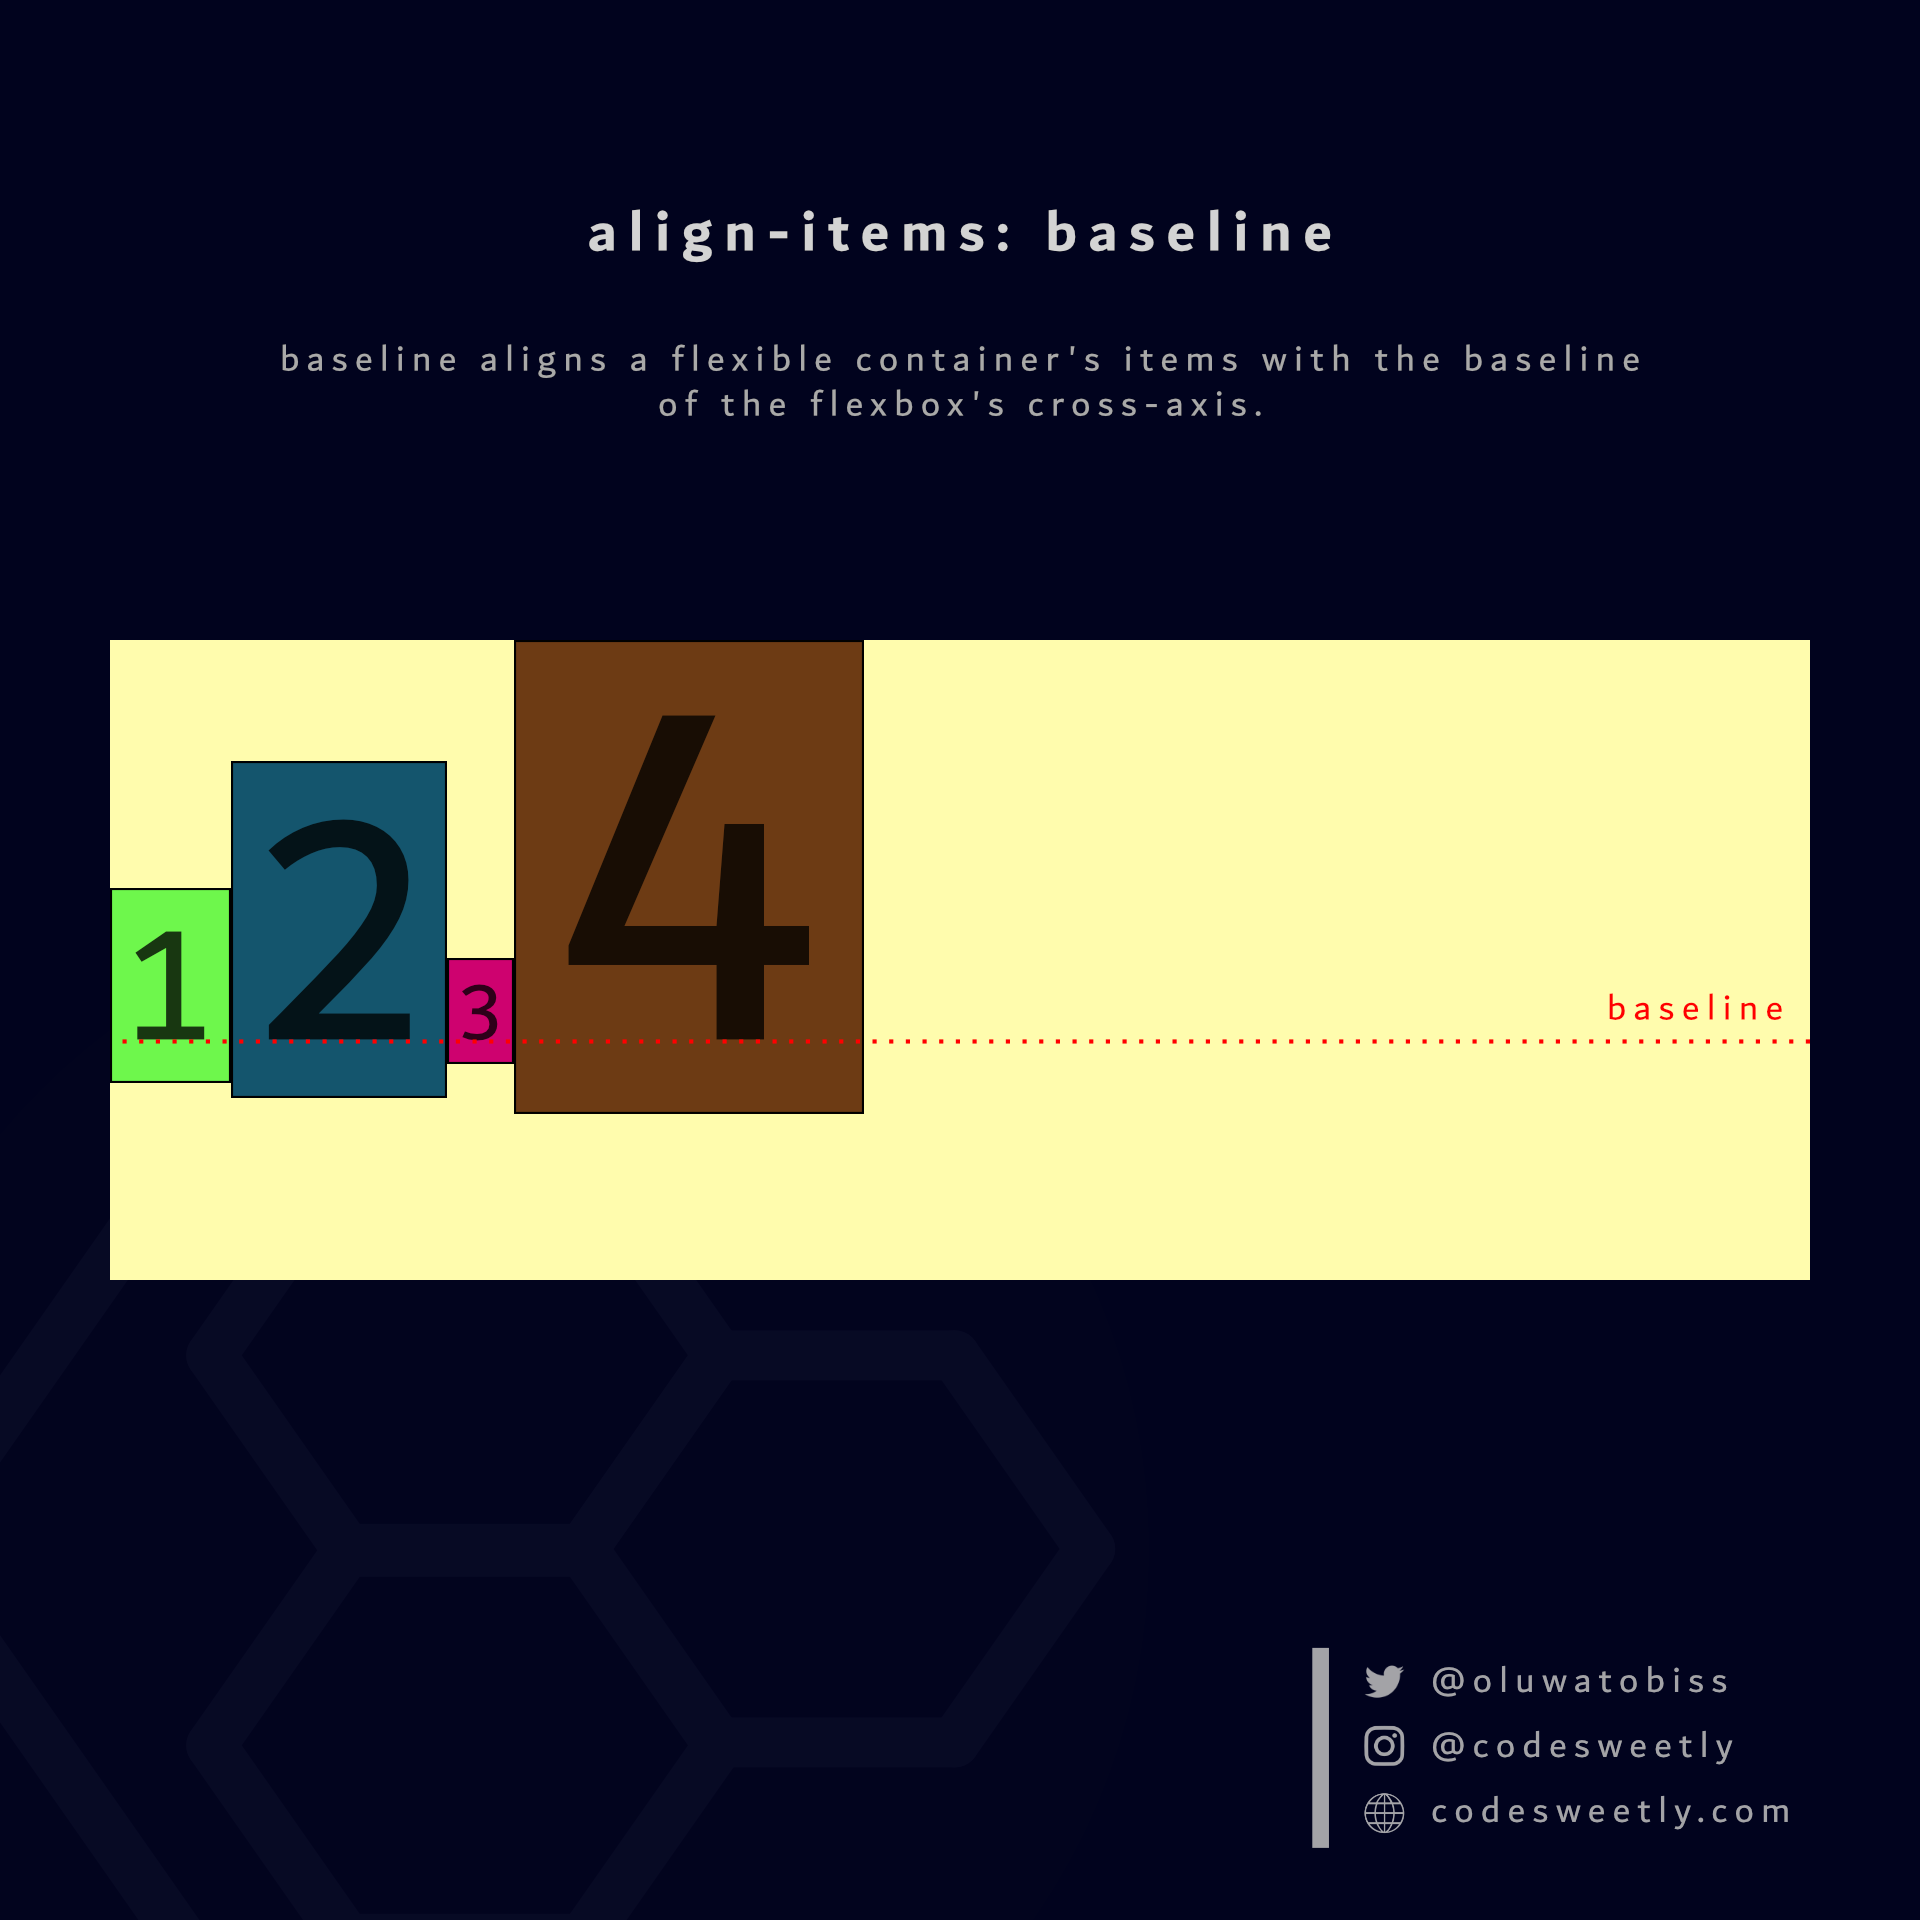 Illustration of align-items' baseline value